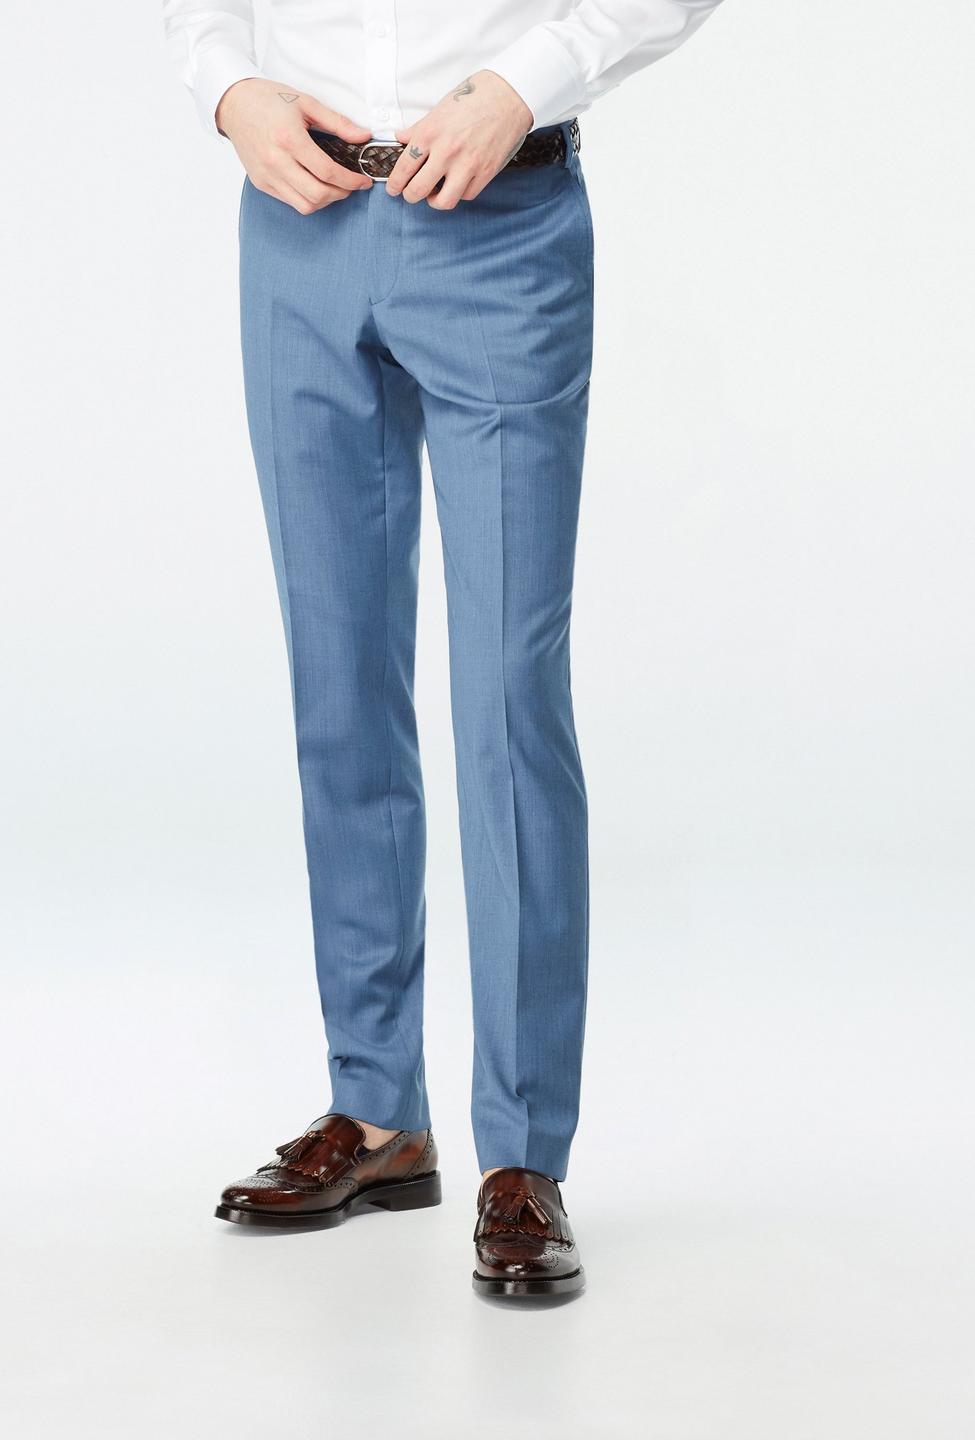 Hemsworth Light Blue Pants